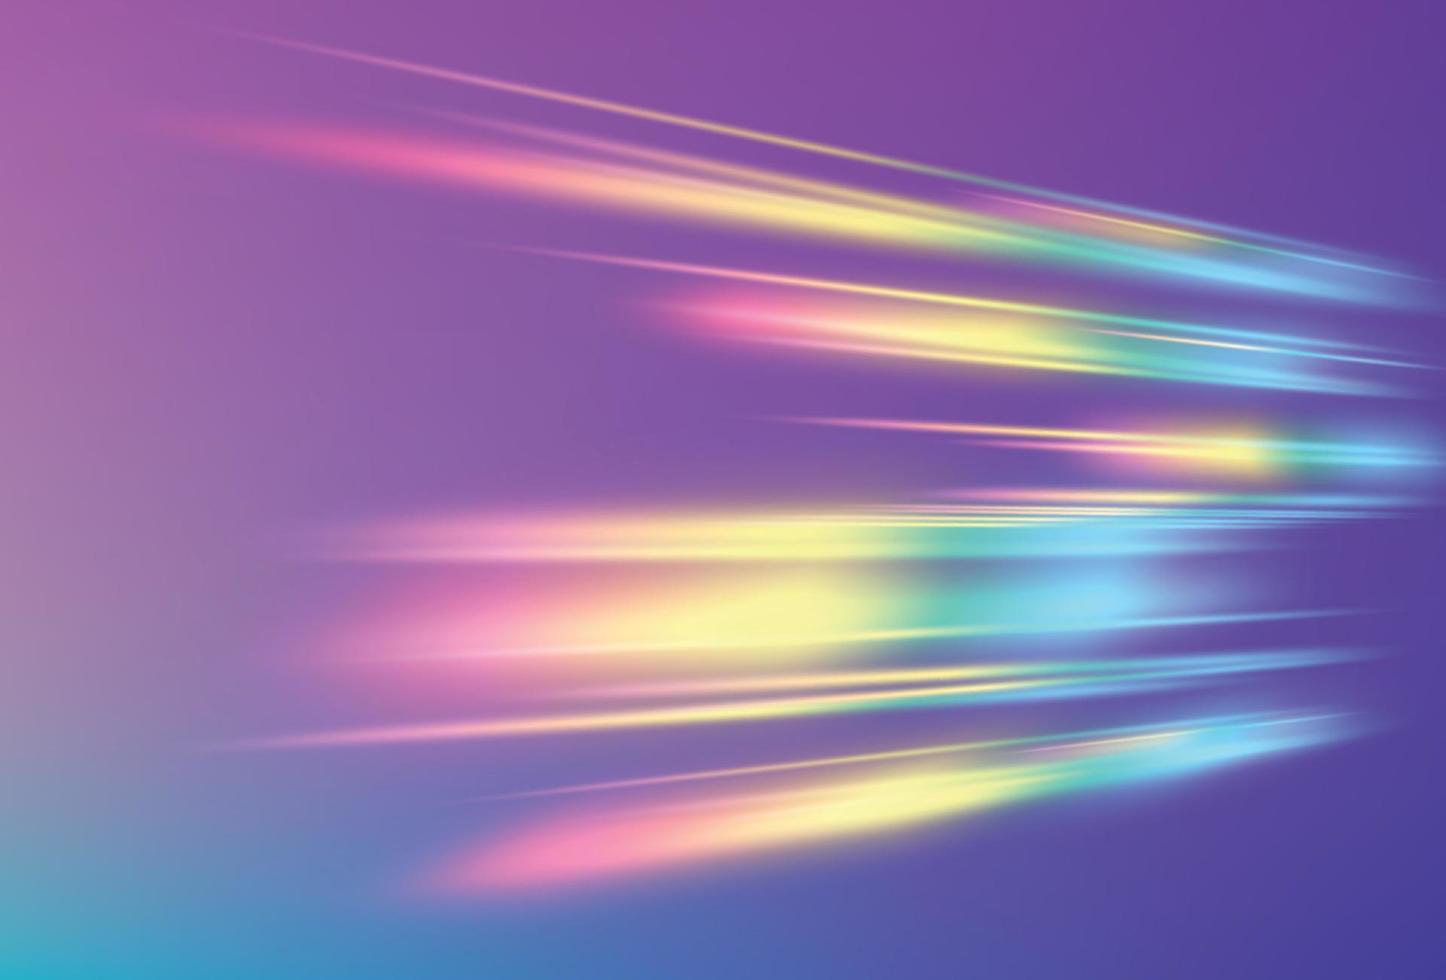 Prism, prism texture. Crystal rainbow lights. vector